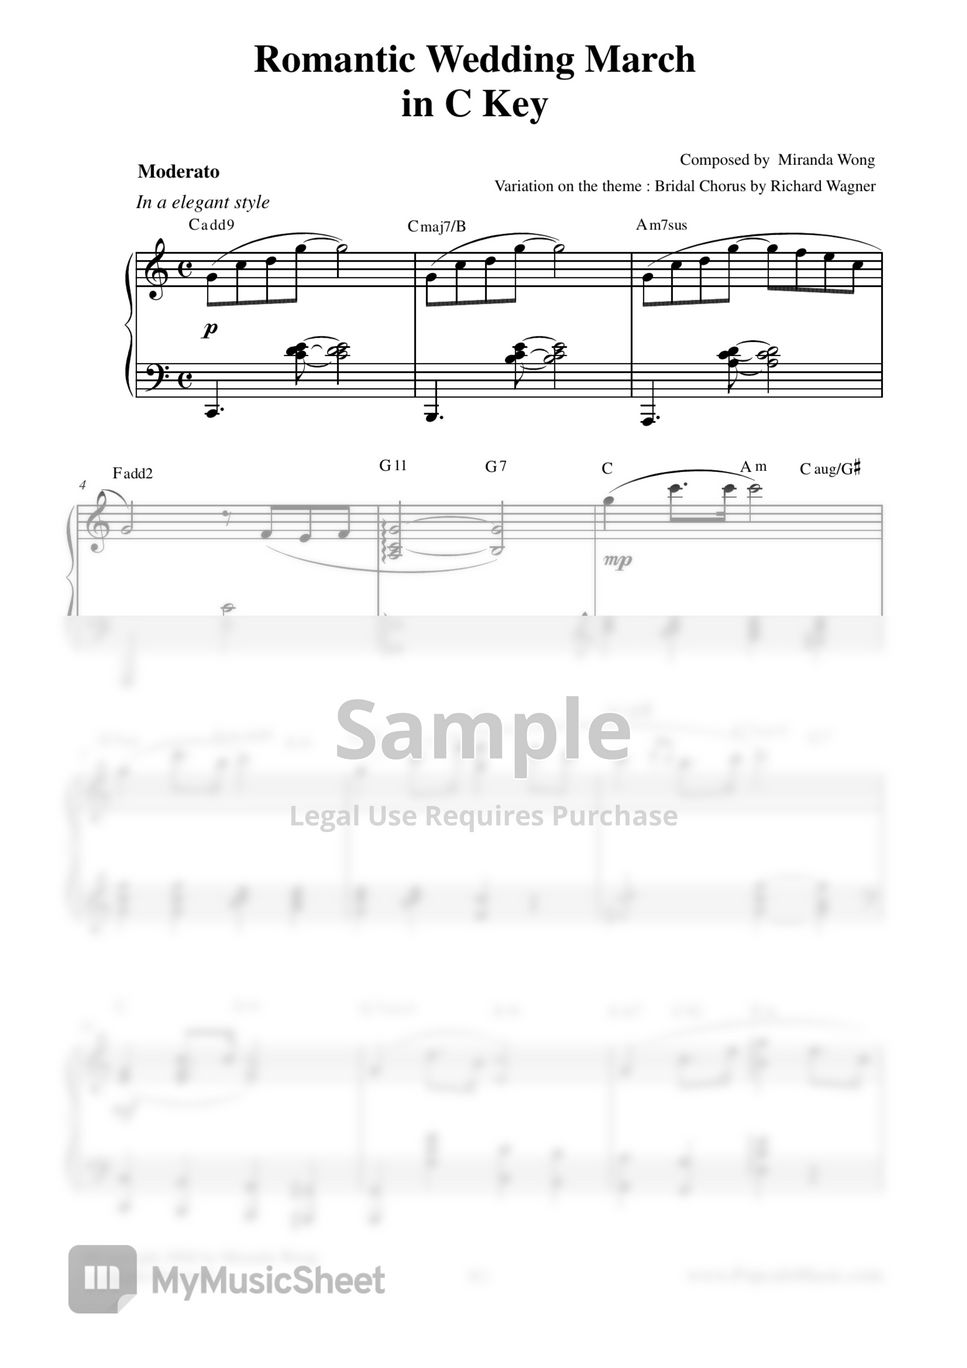 Wagner - Romantic Wedding March - Short Version in C Key by Miranda Wong